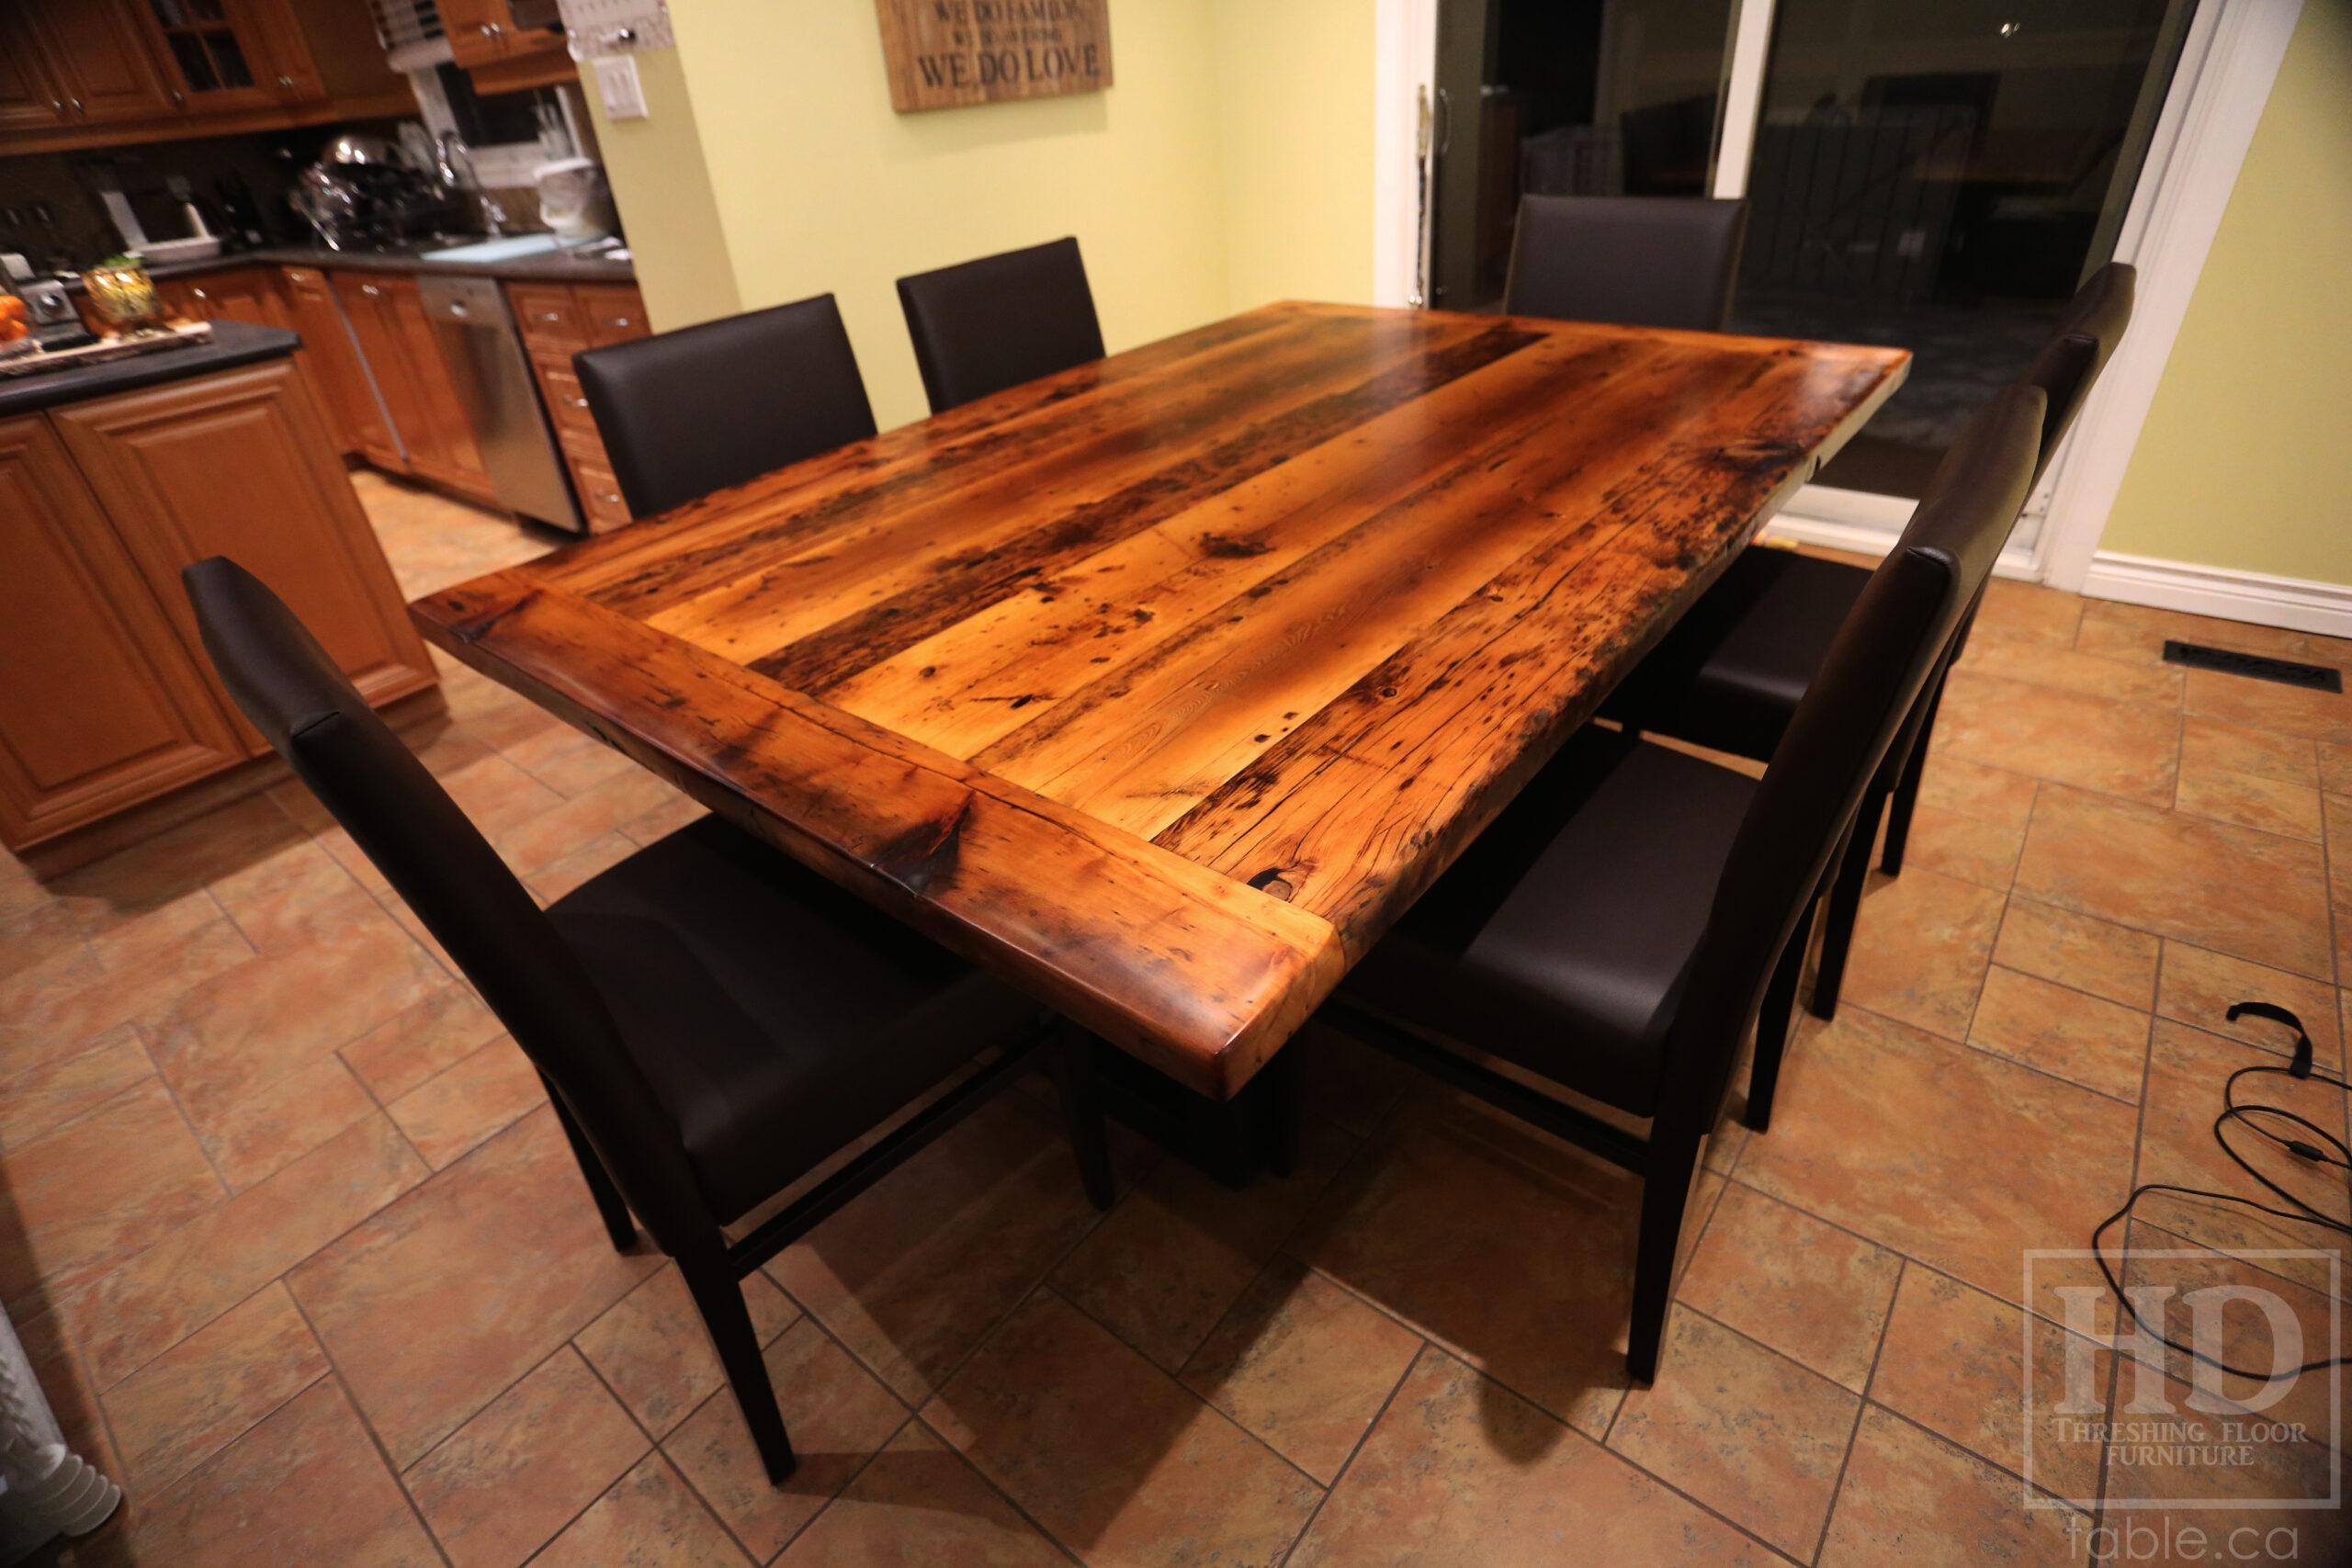 Reclaimed Wood Steel Base Table by HD Threshing Floor Furniture / www.table.ca